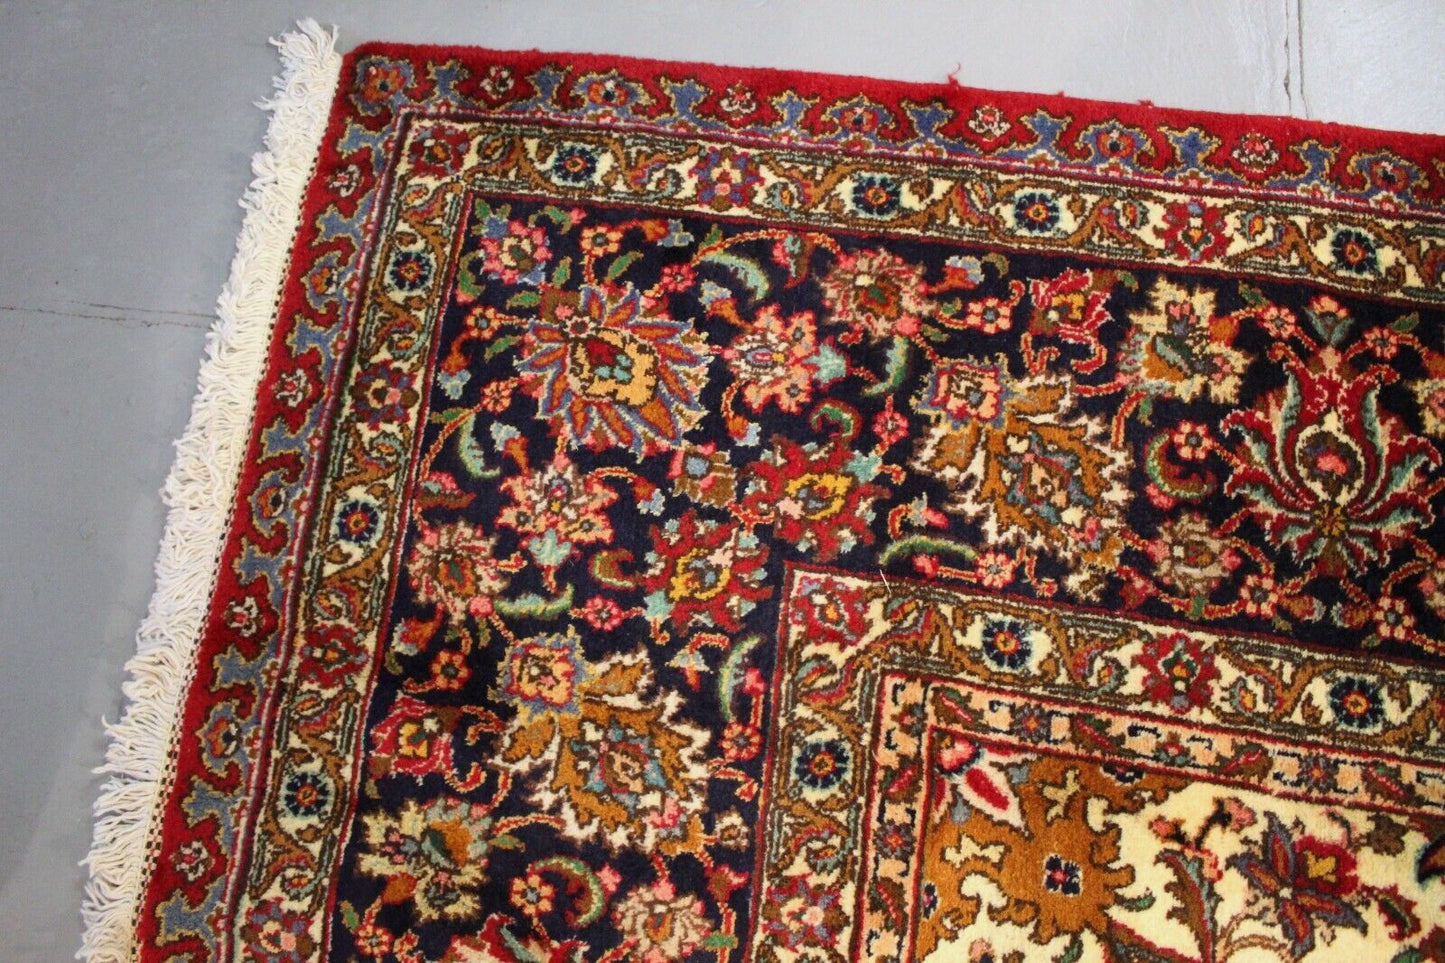 Placing Remarkable Vintage Persian Tabriz Oversize Rug in Home for Timeless Elegance and Artistry - 1960s